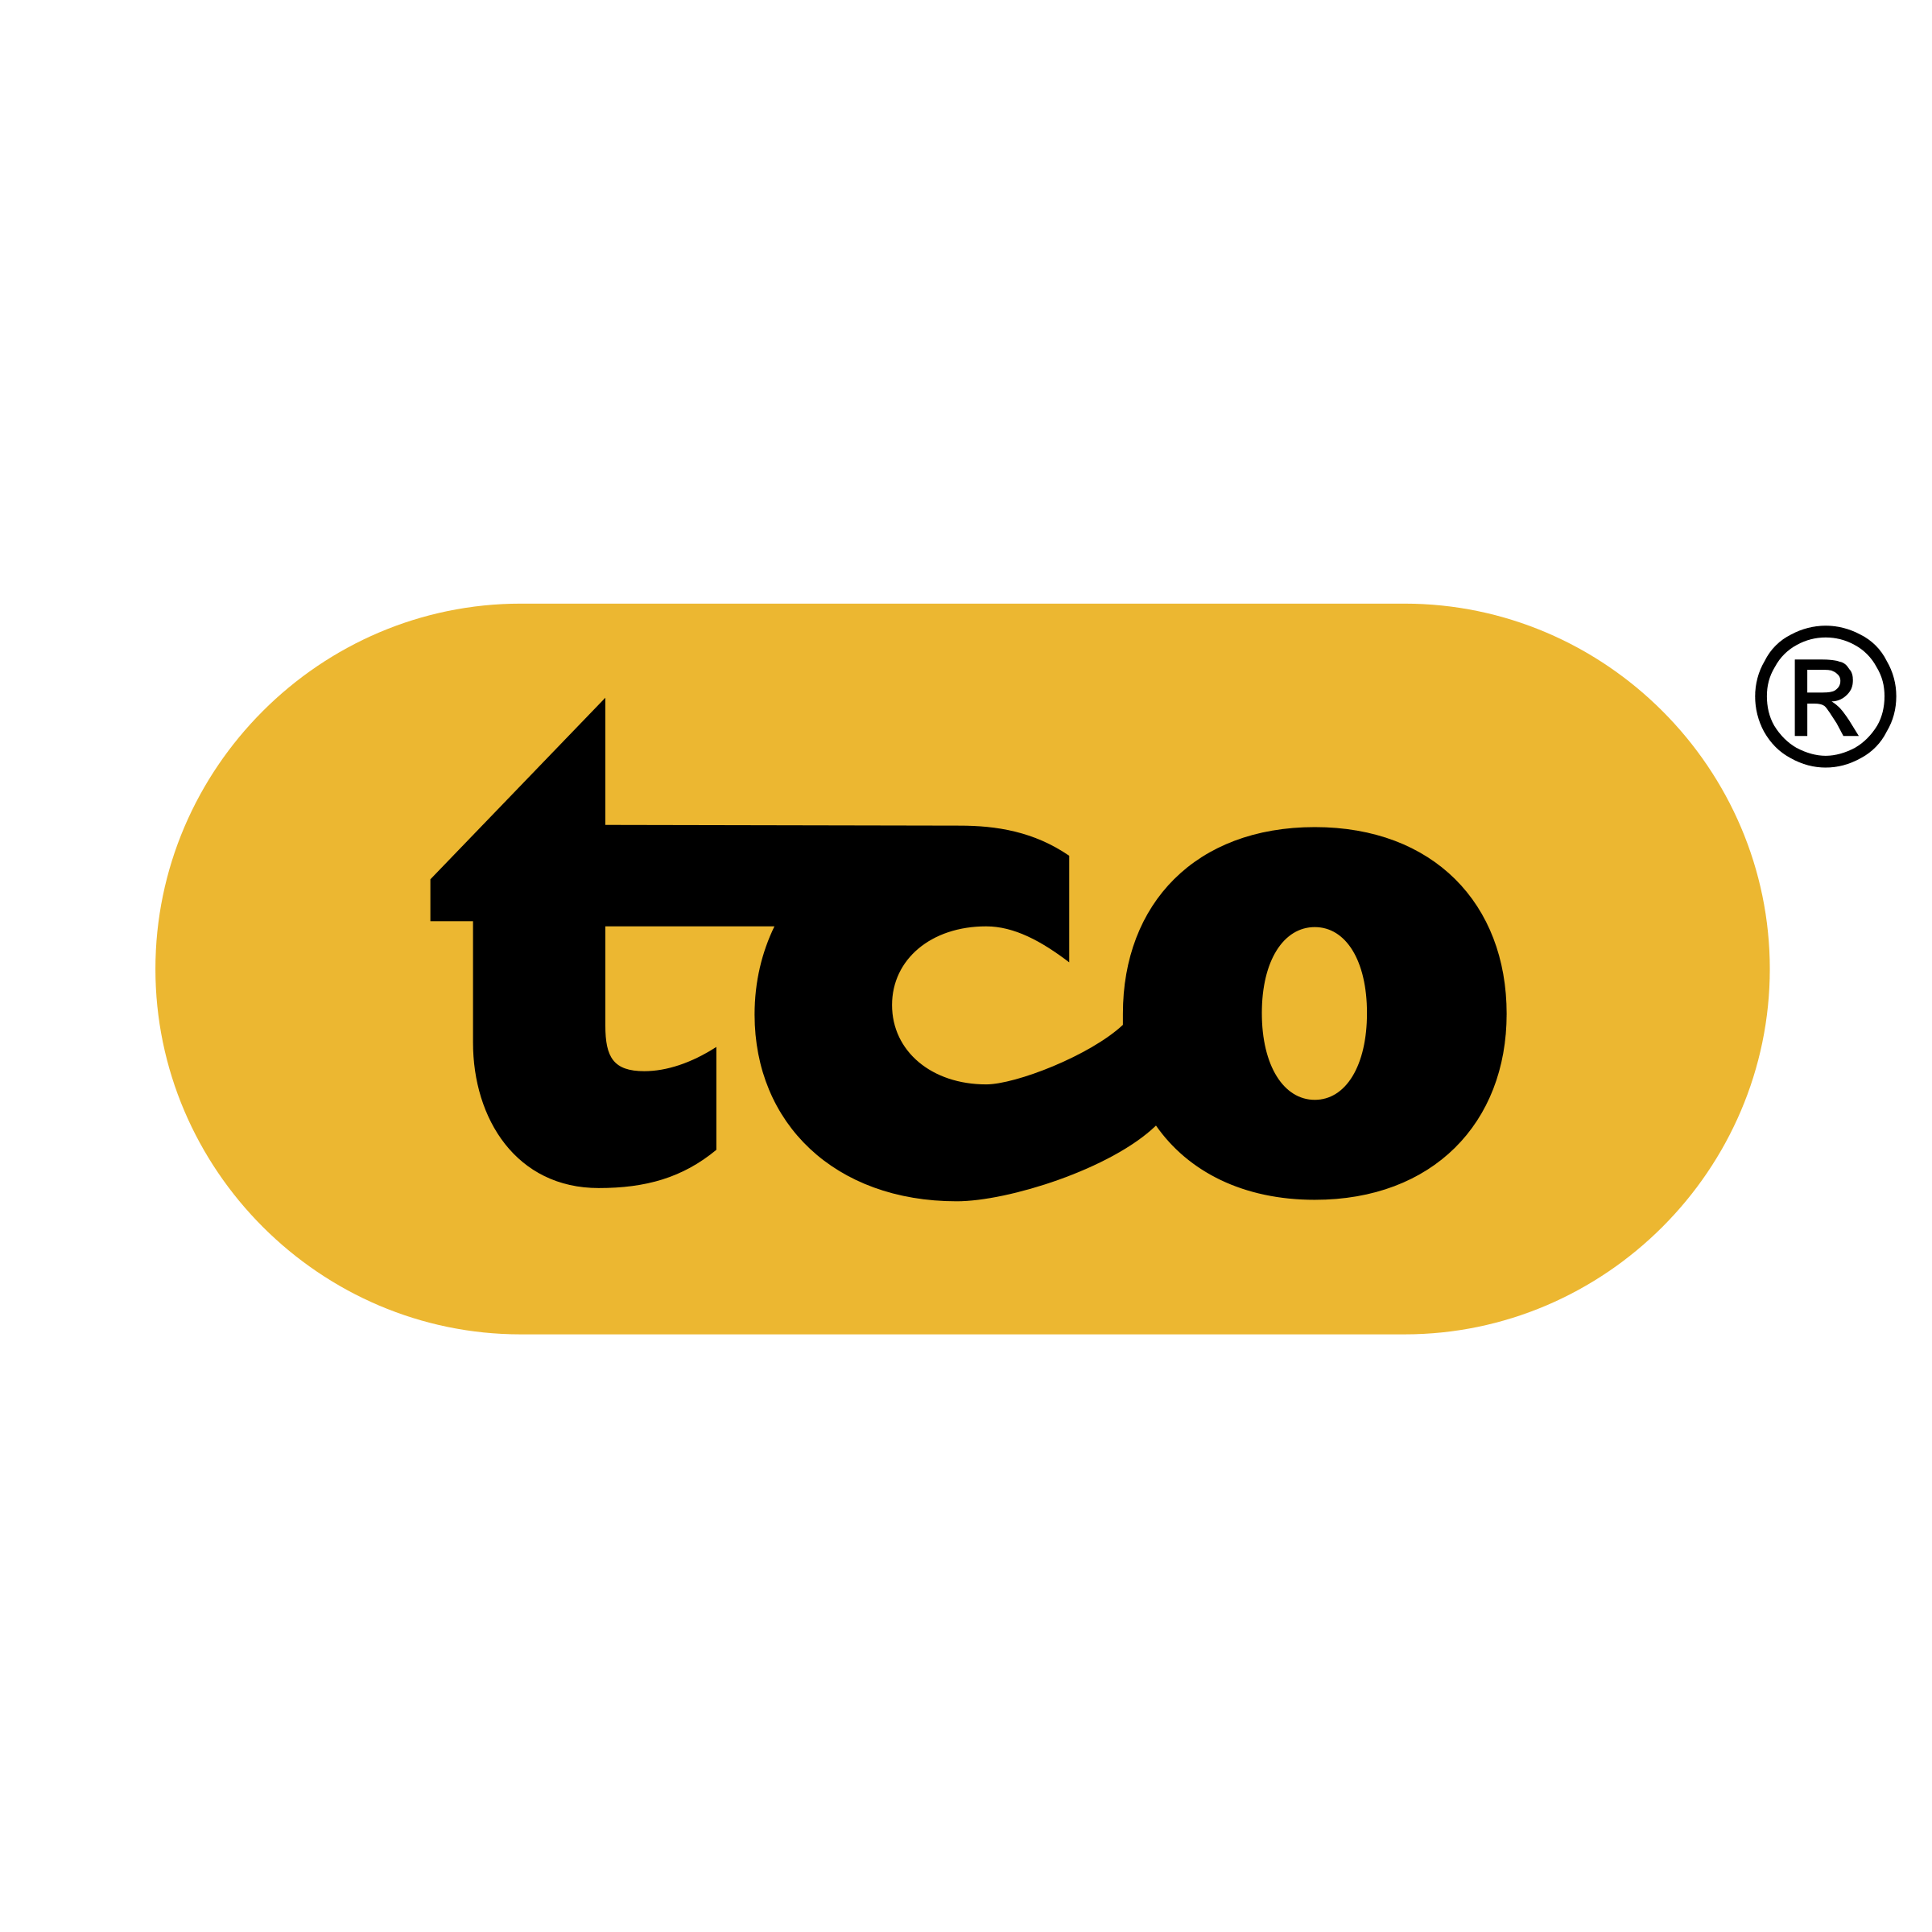 TCO Logo - TCO Logo PNG Transparent & SVG Vector - Freebie Supply